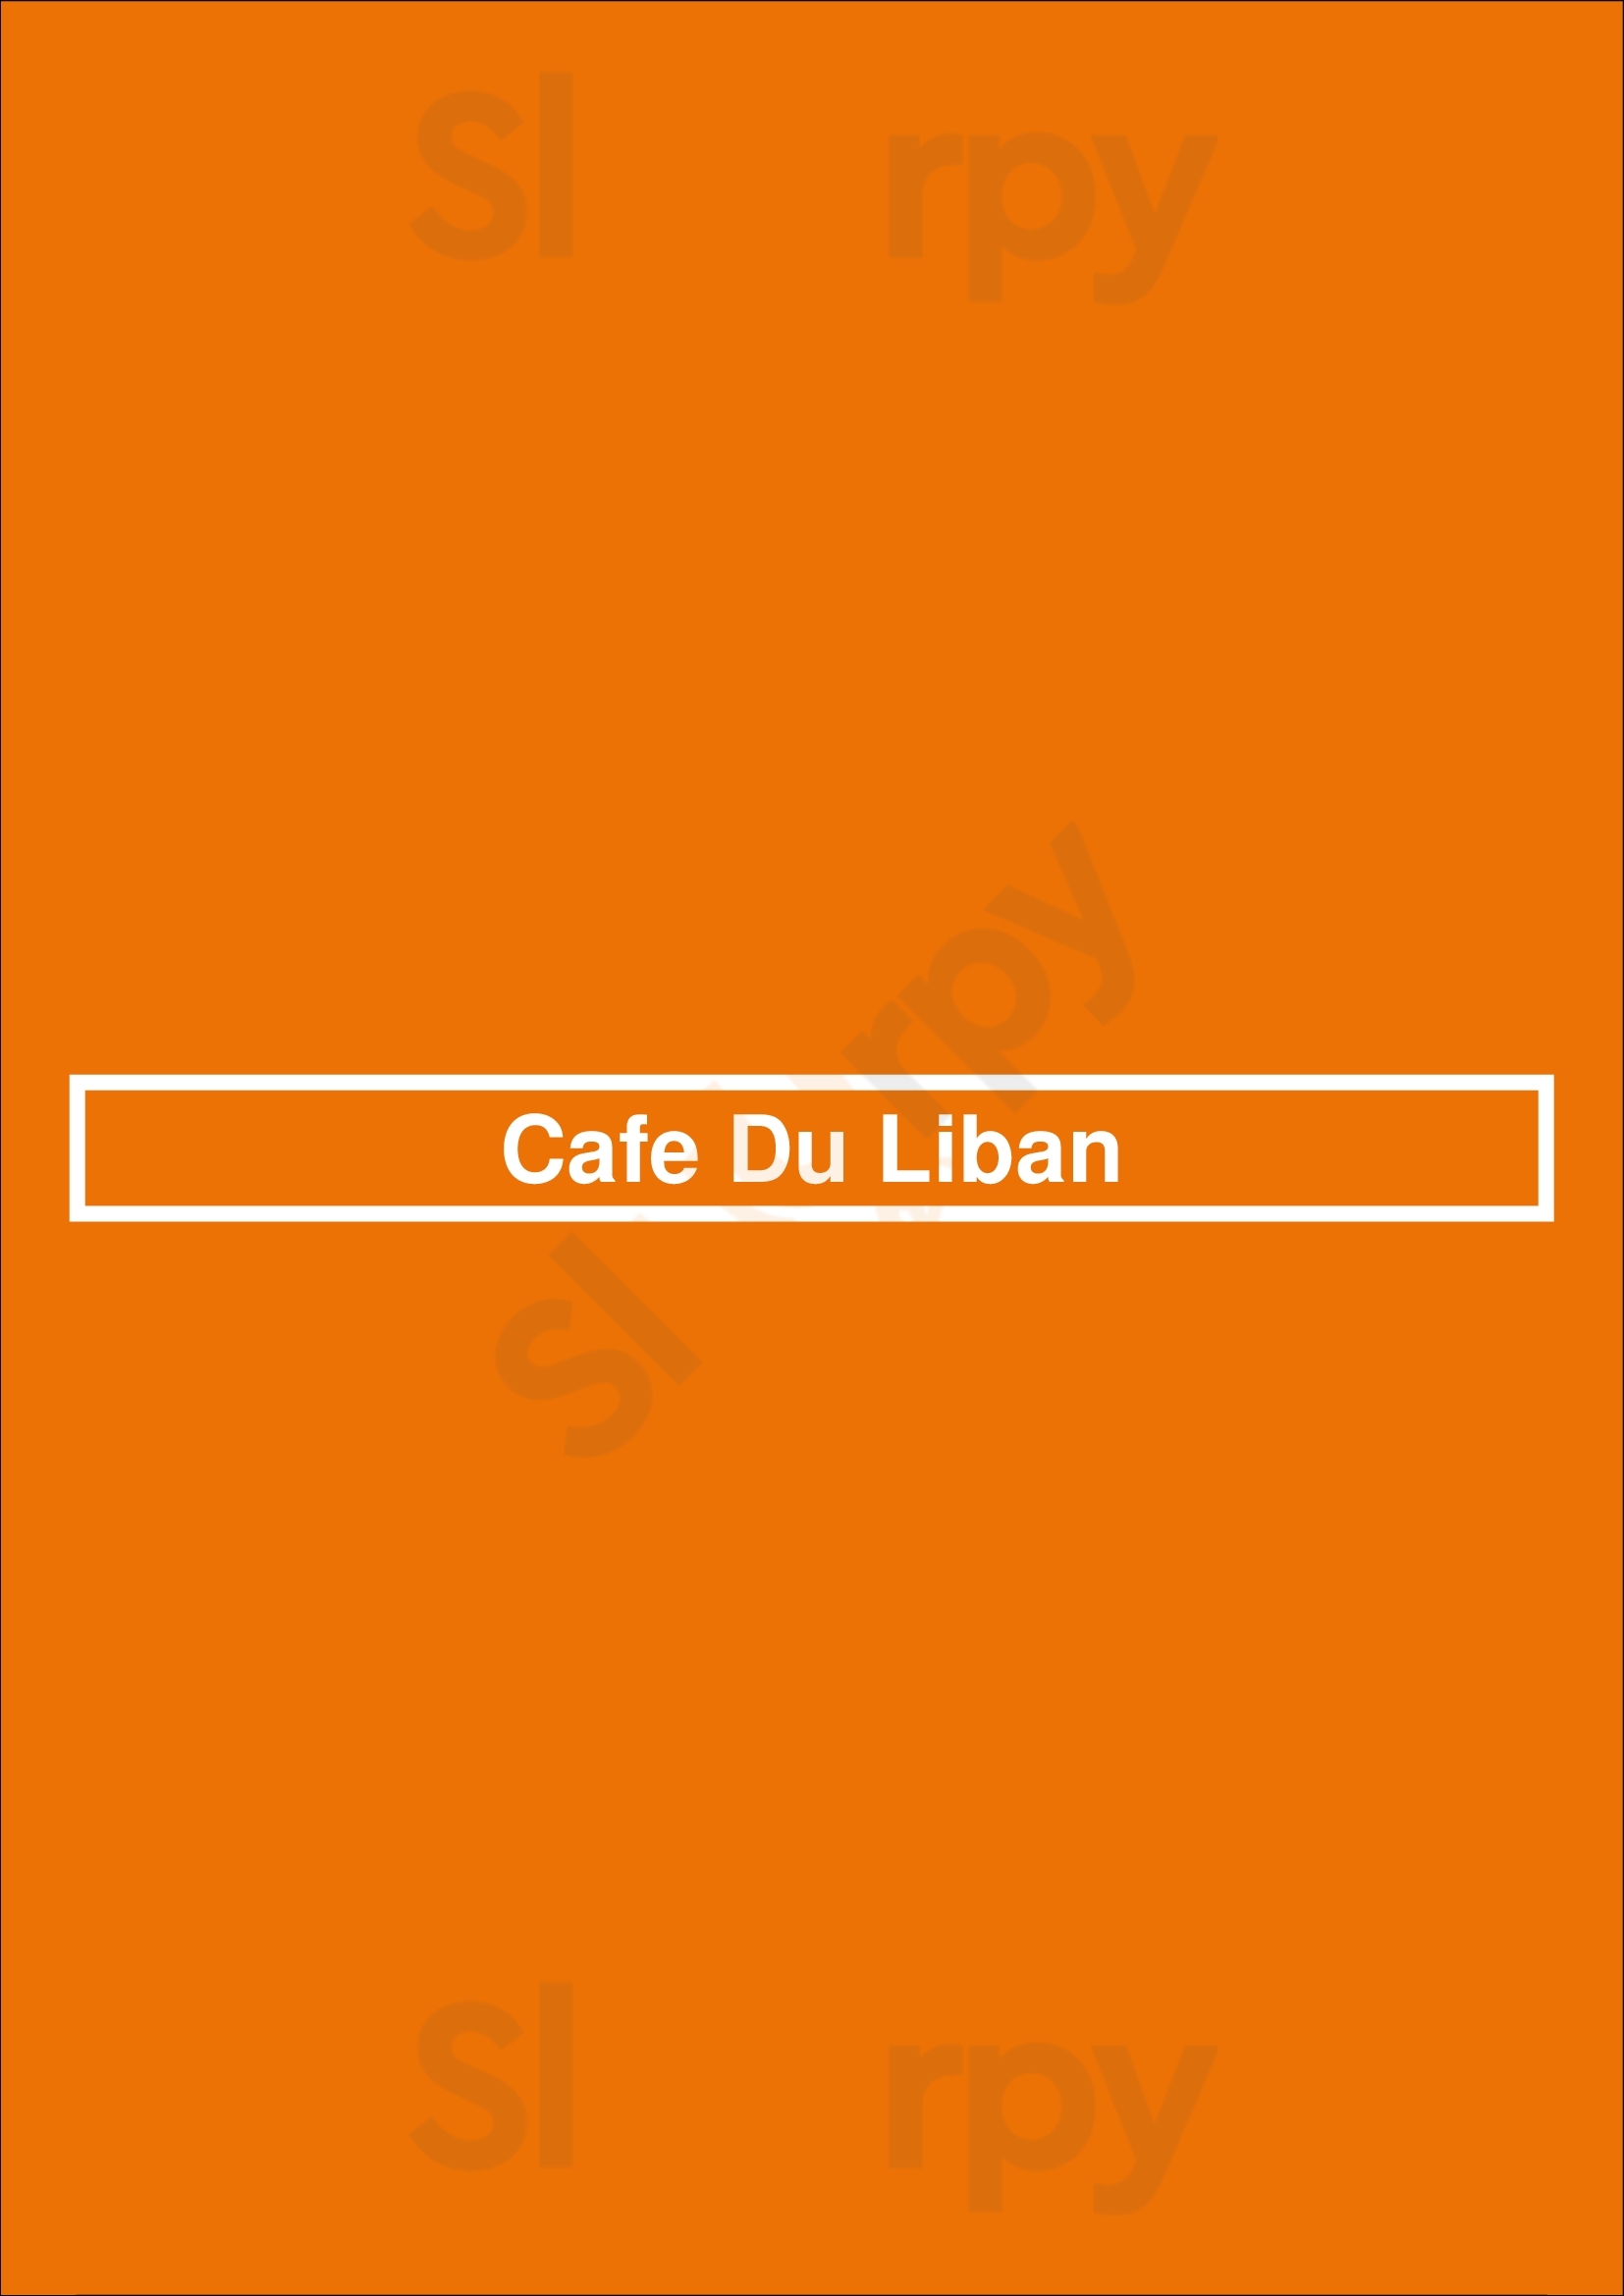 Cafe Du Liban Los Angeles Menu - 1